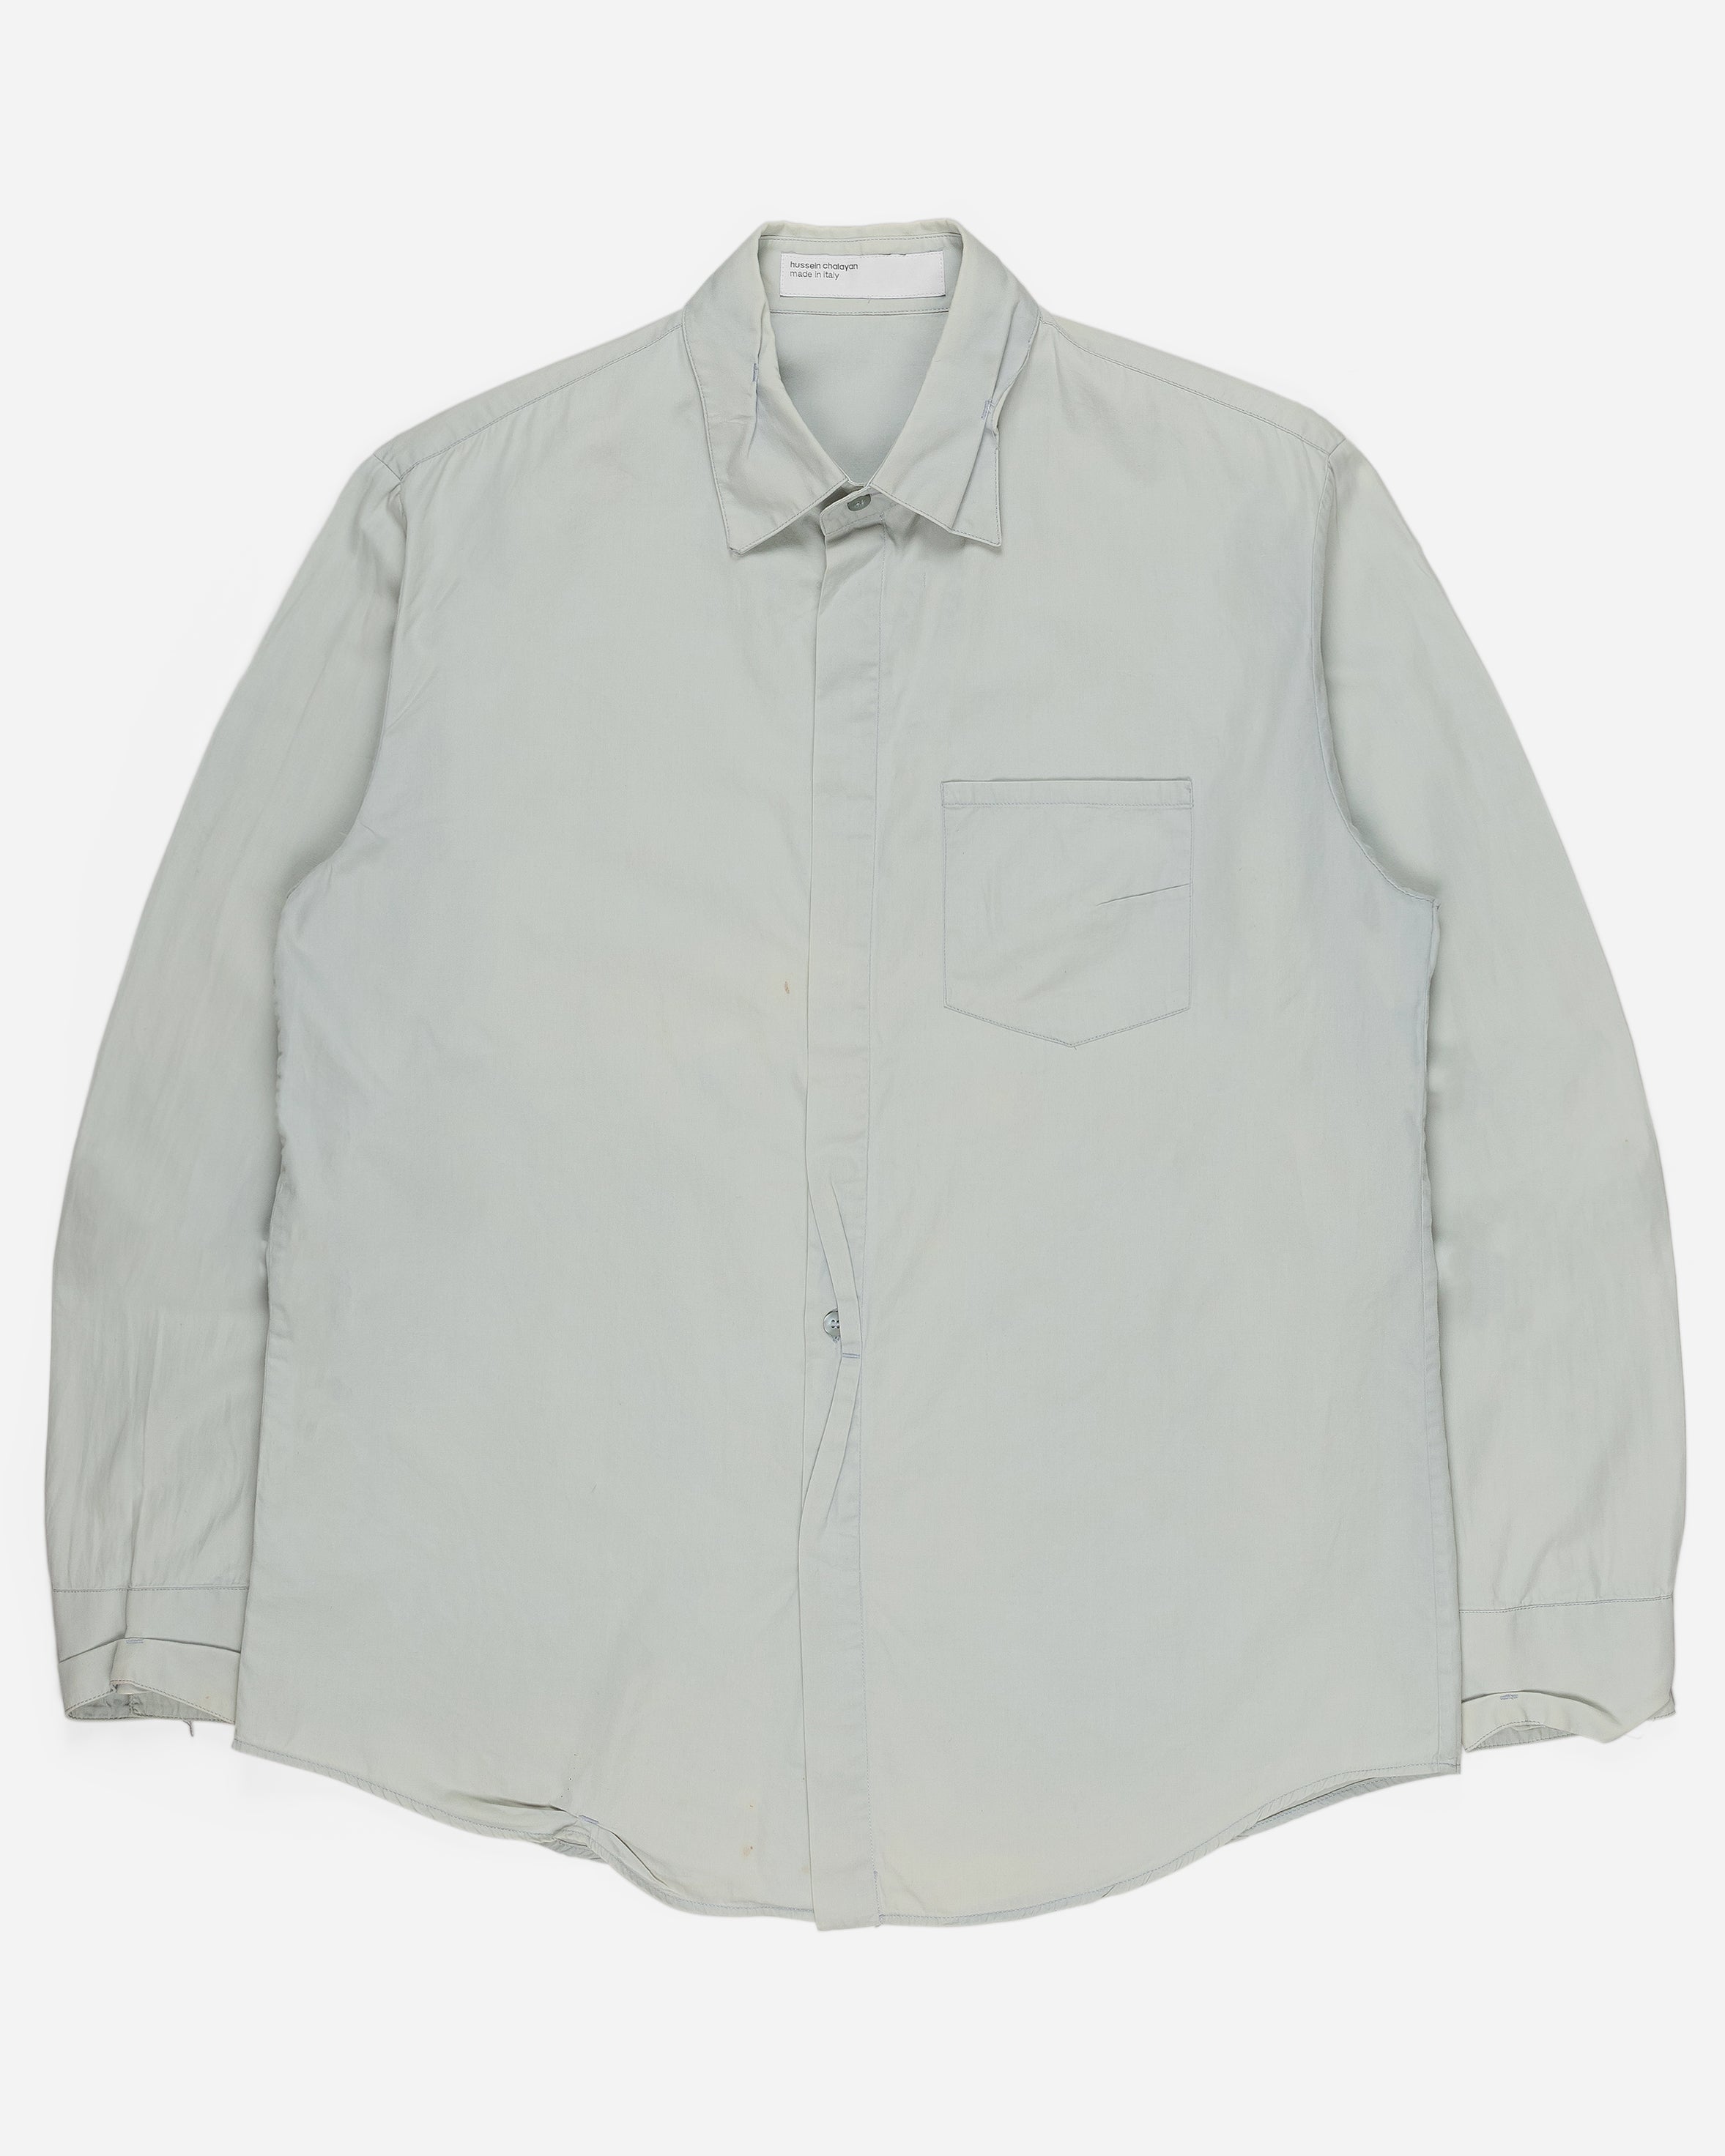 Hussein Chalayan Warped Mint Shirt - SS06 